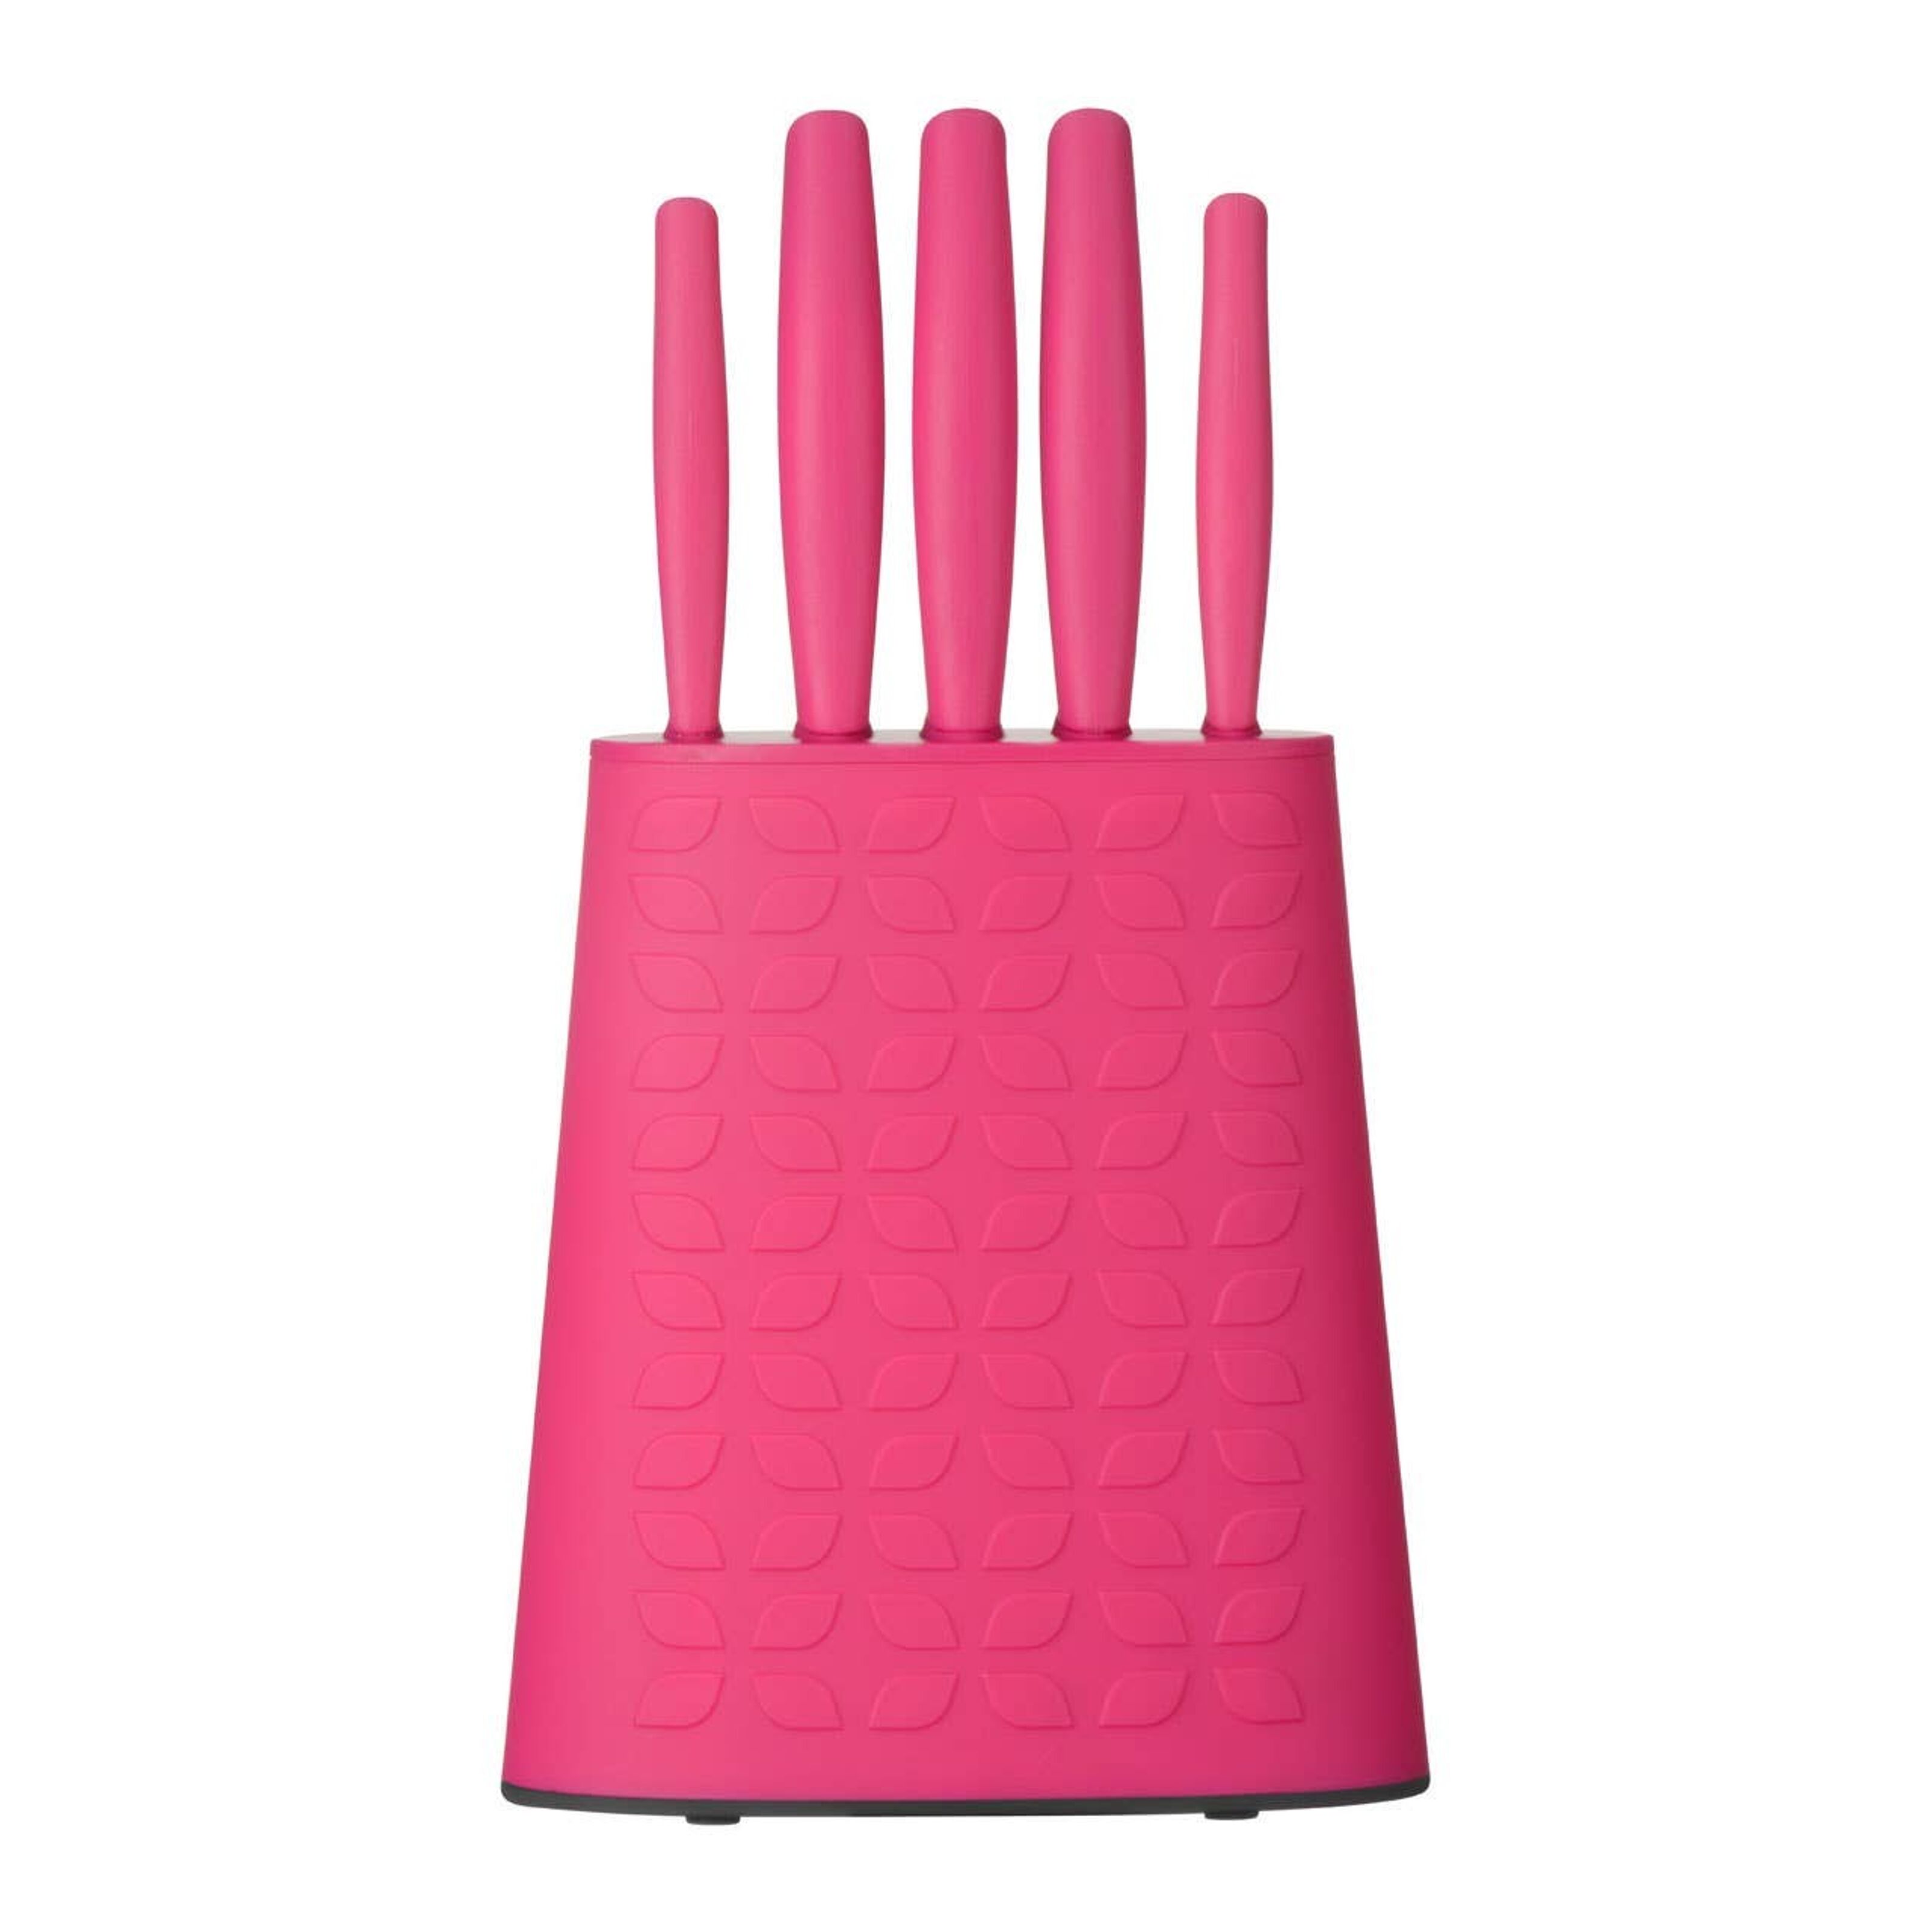 Buy wholesale 5pc Hot Pink Knife Block Set